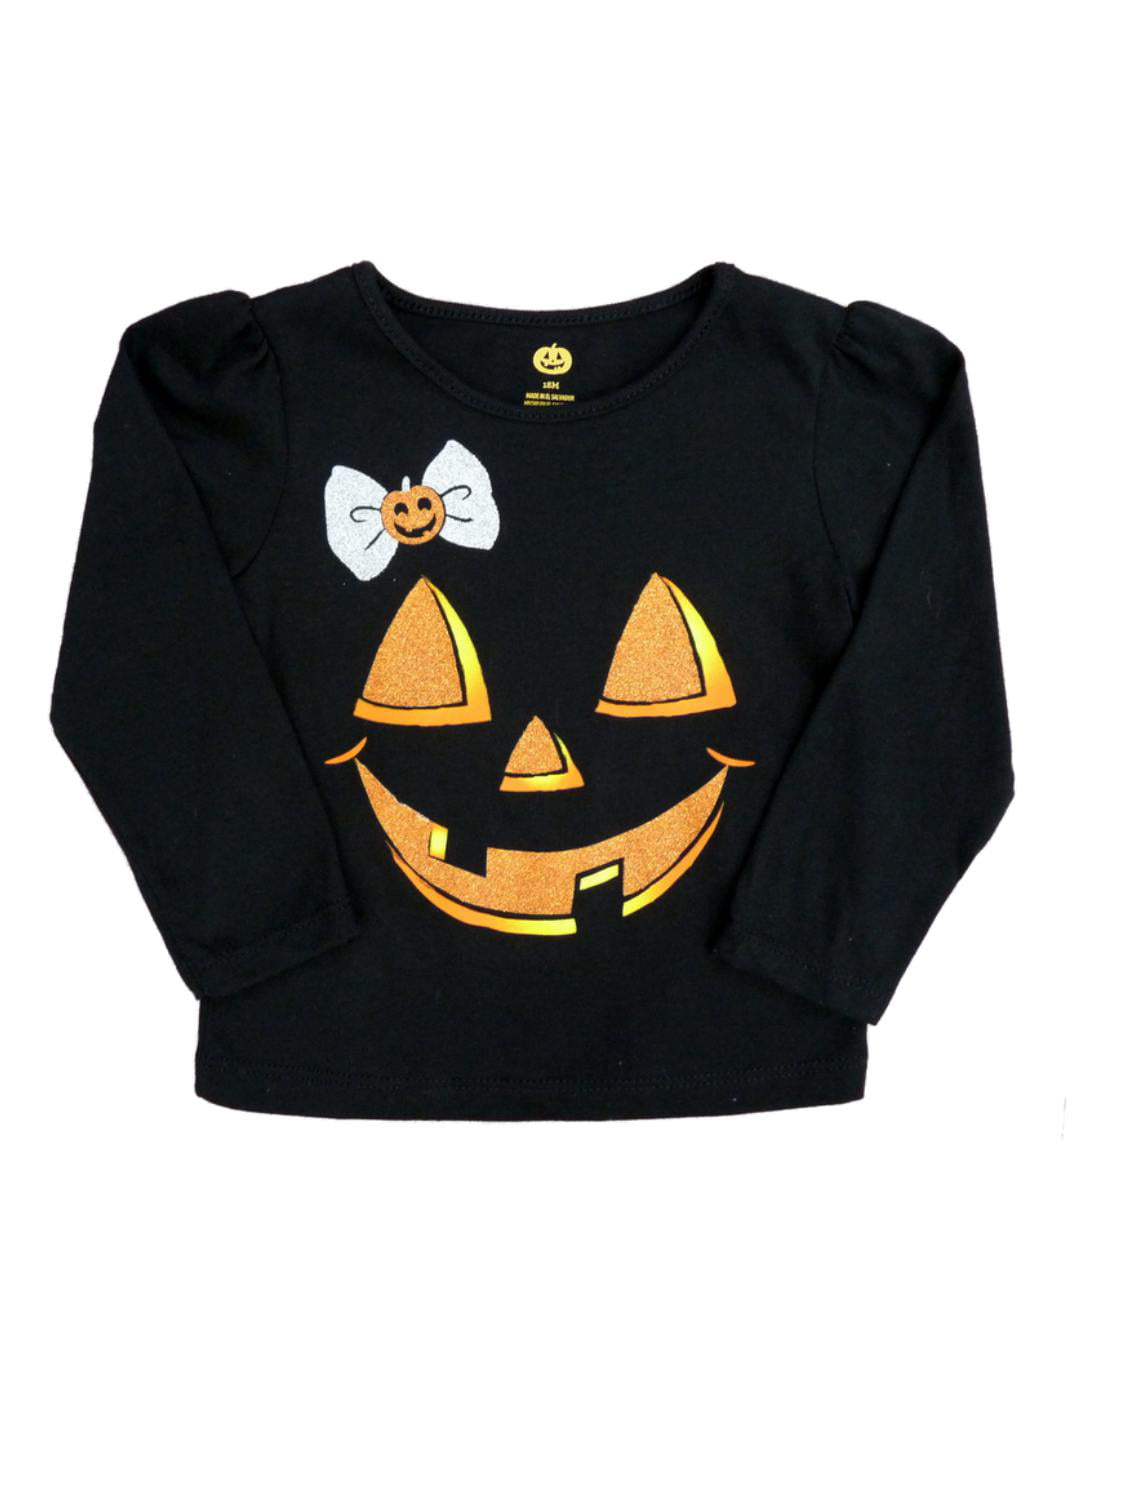 Kleding Meisjeskleding Sweaters Pullovers Girls Halloween Jackolantern Sweatshirt Toddler Girl Pumpkin Outfit Fall Sweater Toddler Long Sleeve Shirts Jack o lantern Face Shirt 